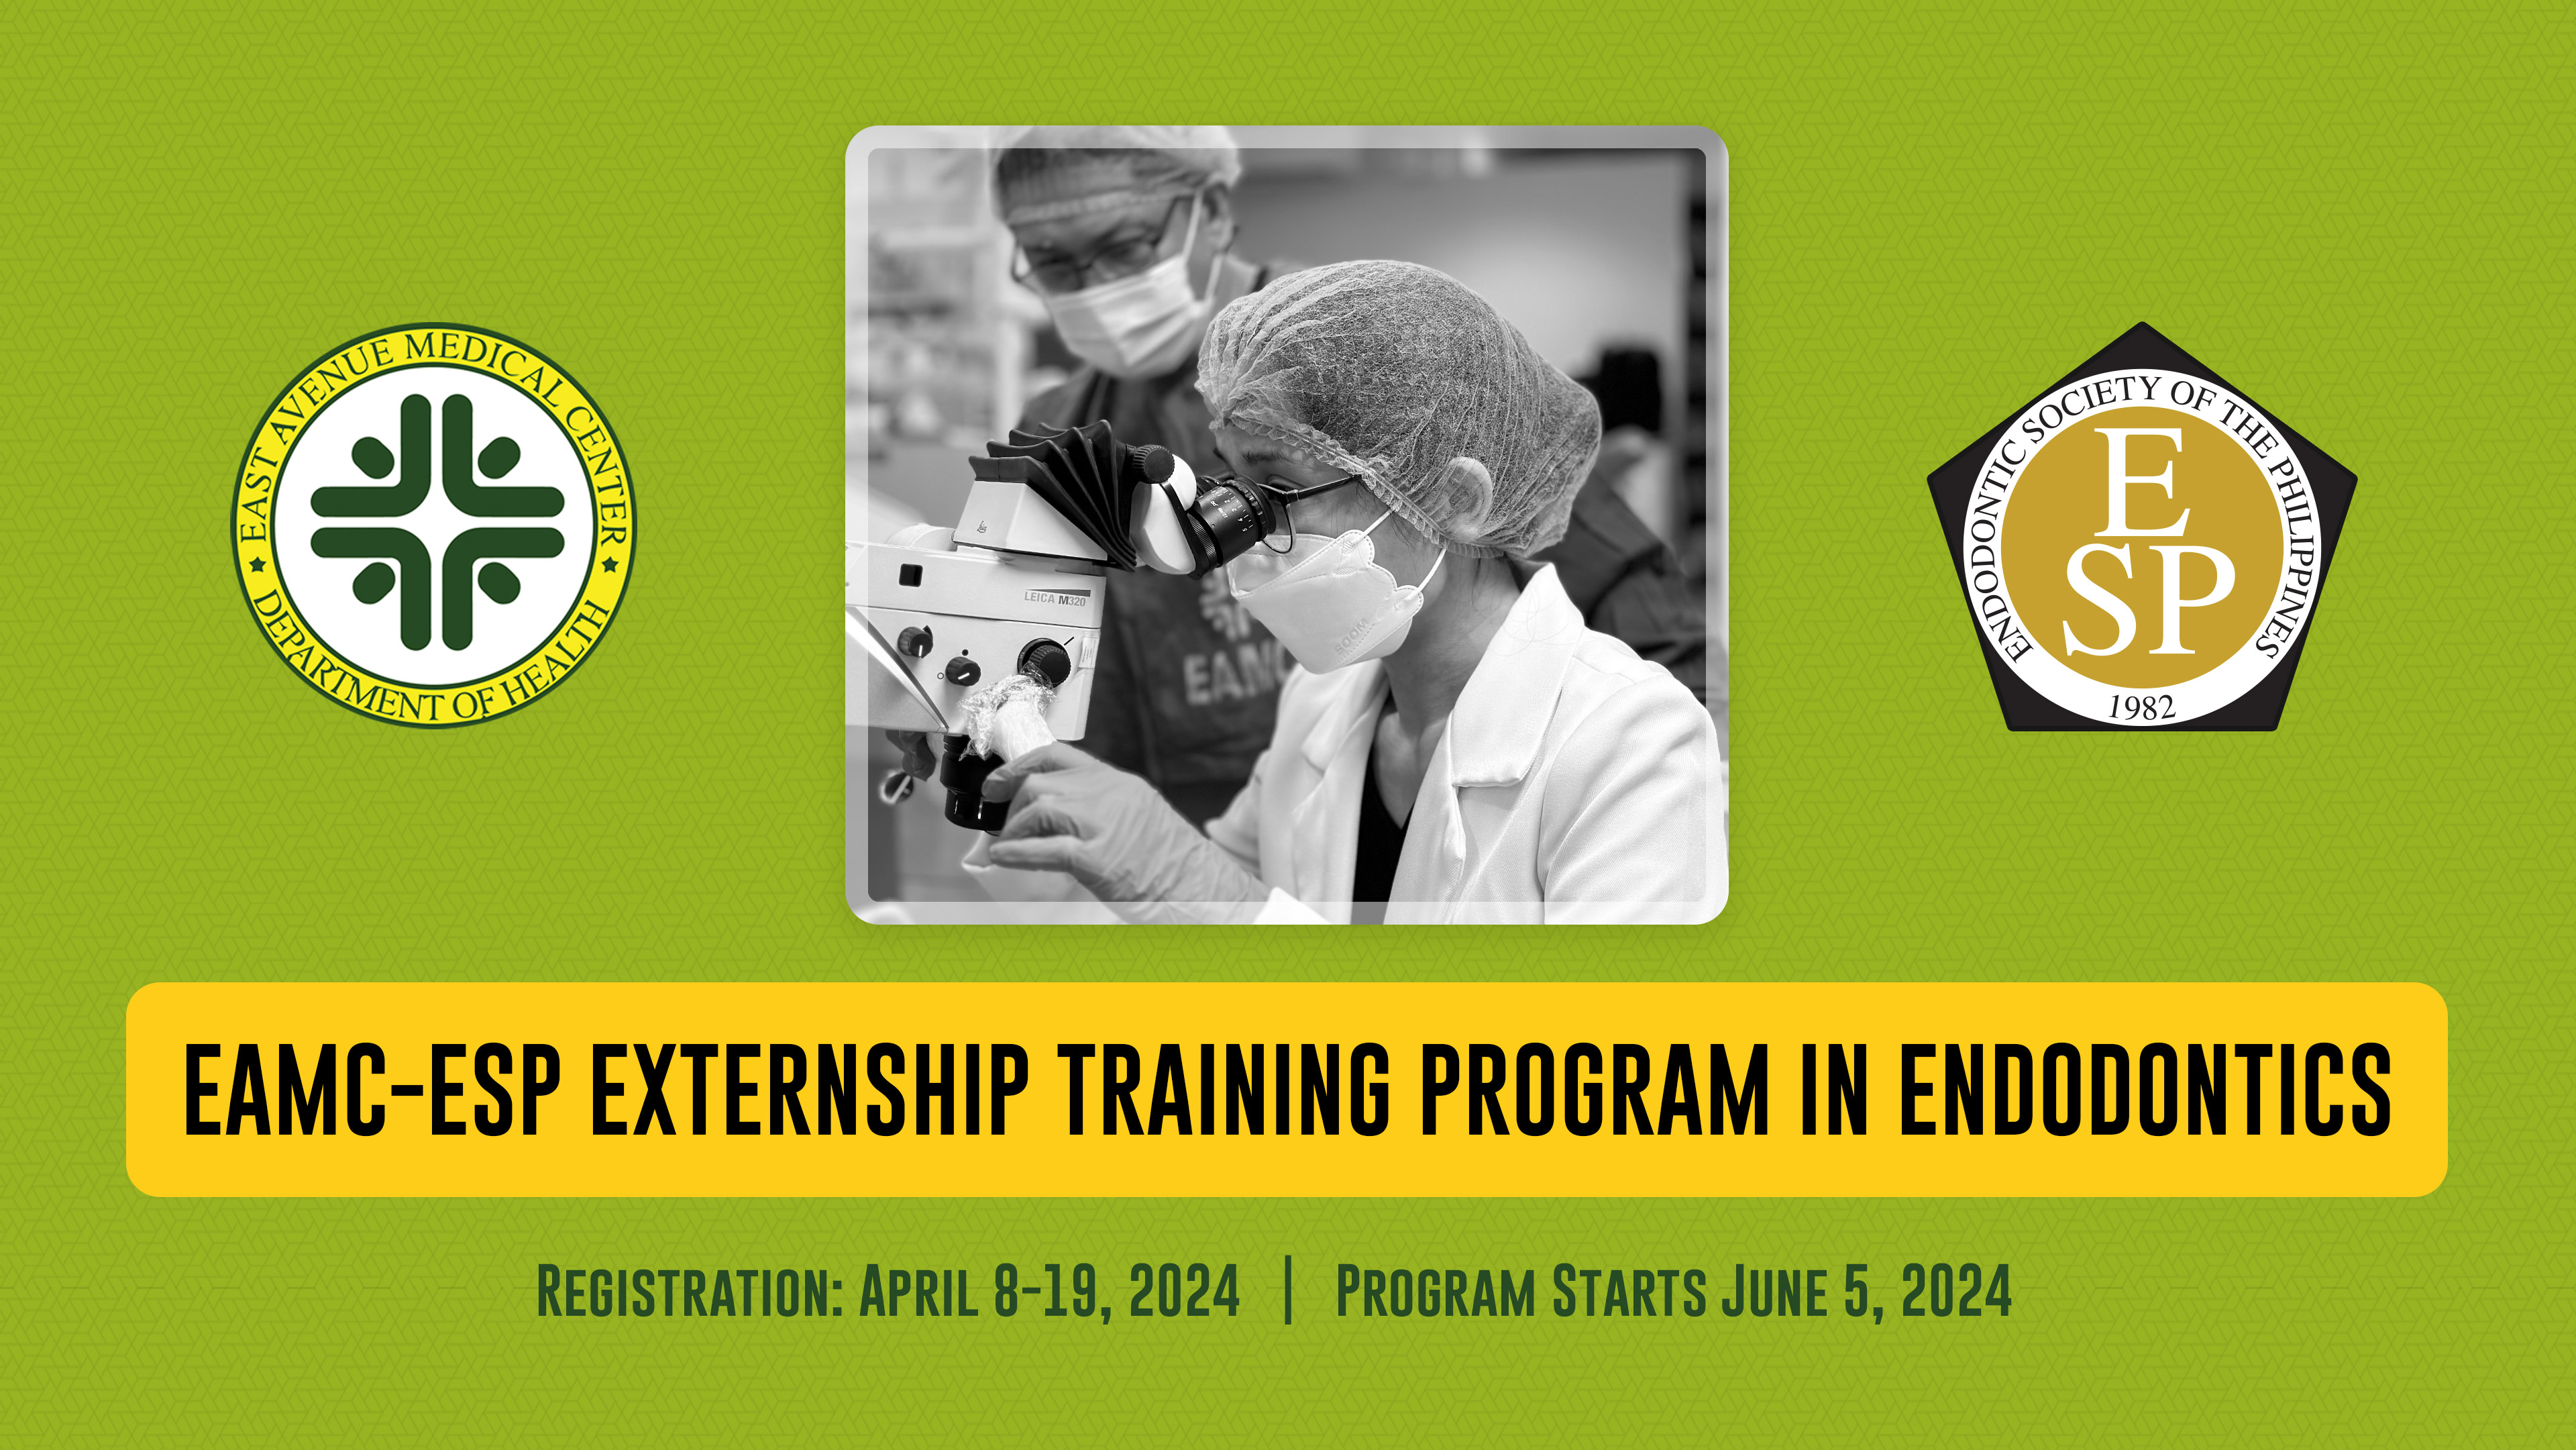 EAMC-ESP Externship Training Program in Endodontics 2024